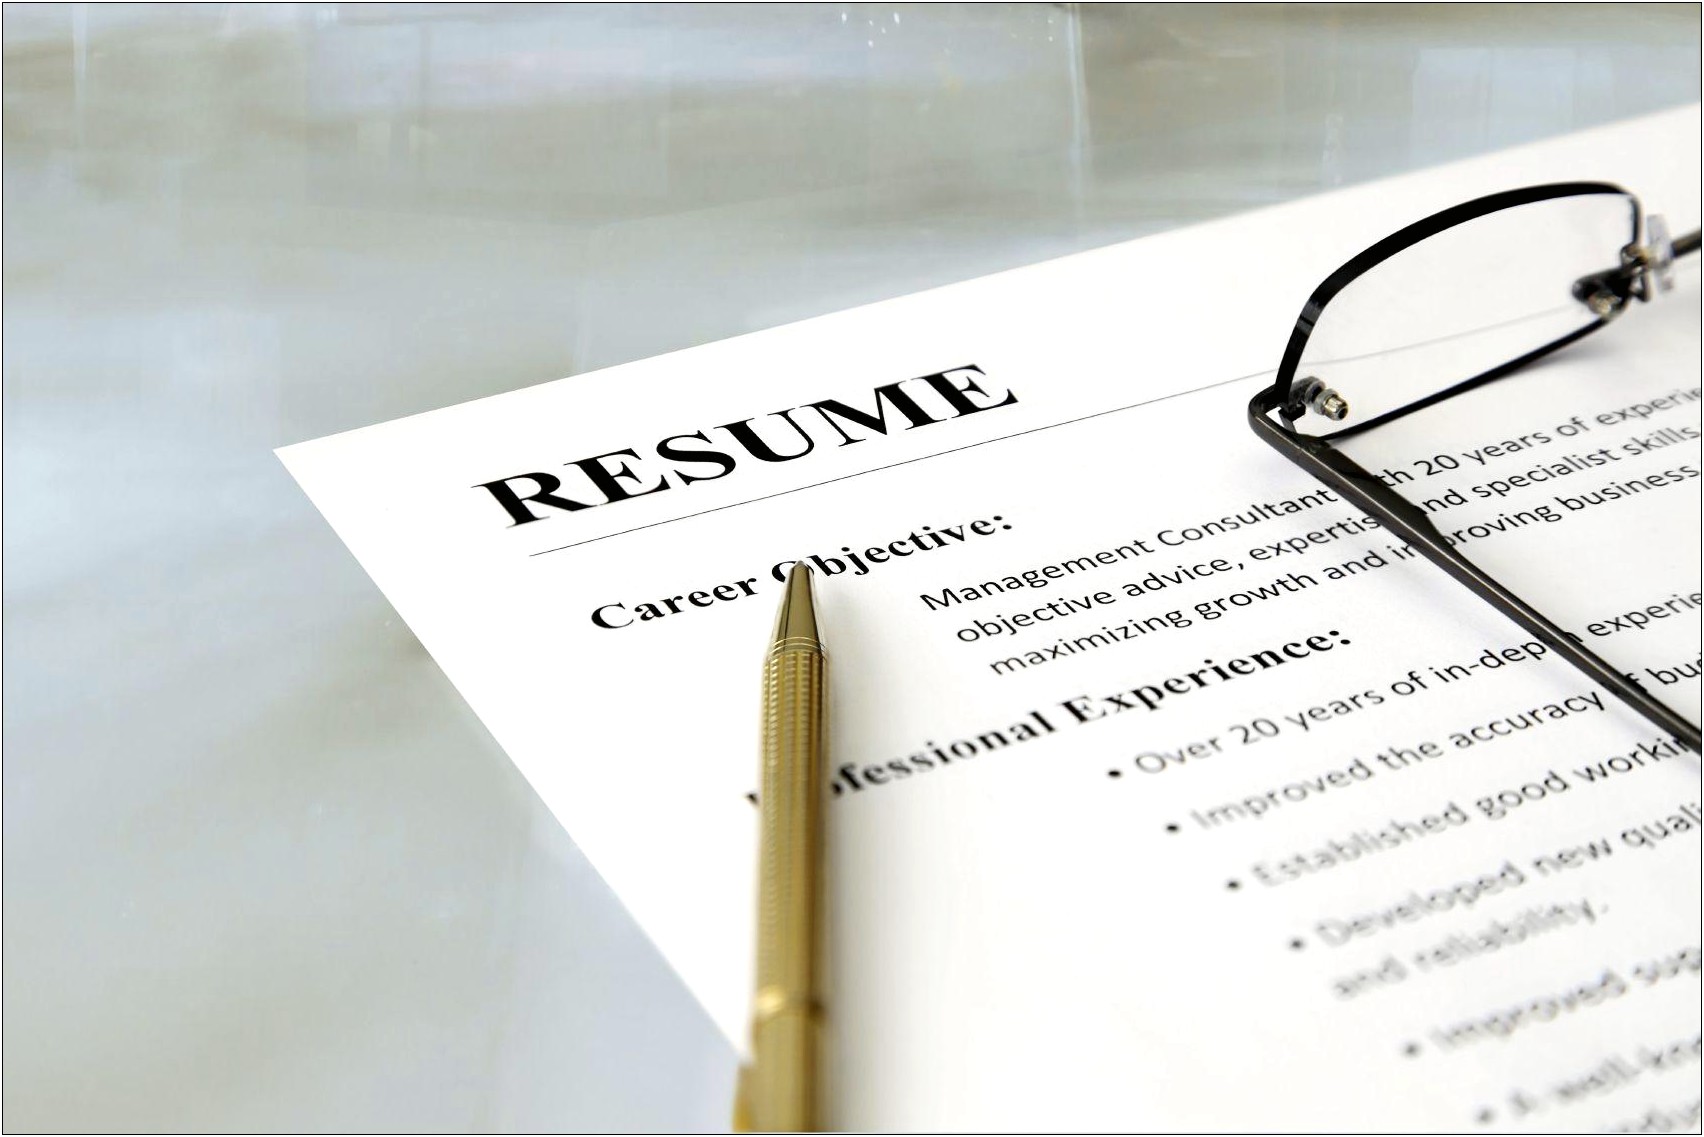 Seeking Health Care Administrator Objective Resume